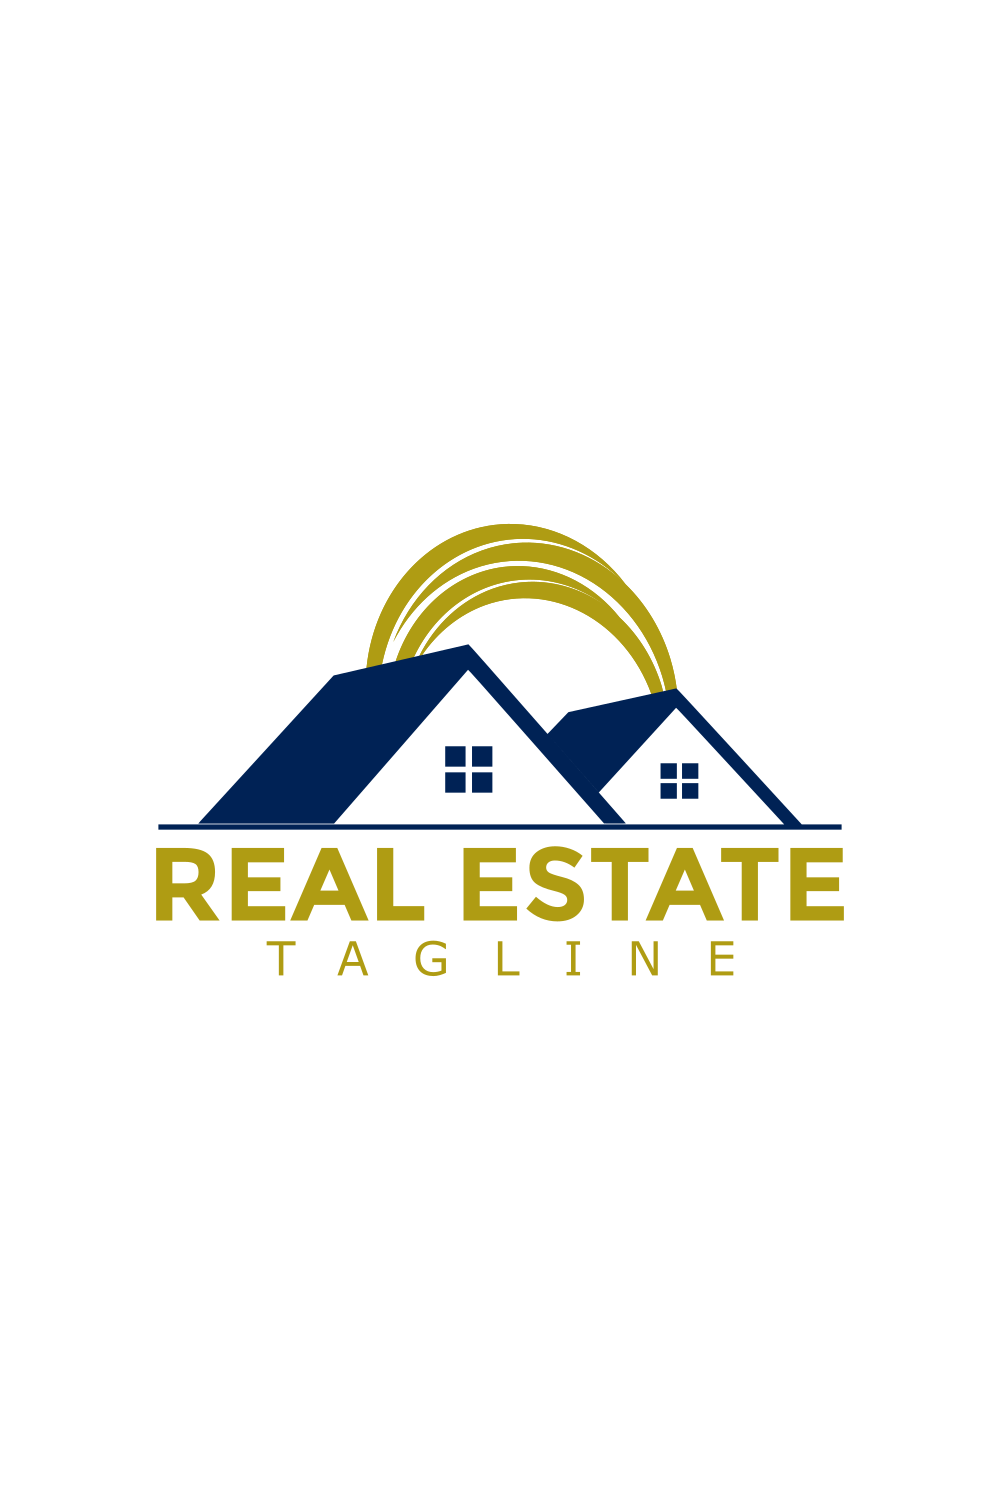 Cool Real Estate Logo Design Template previews.